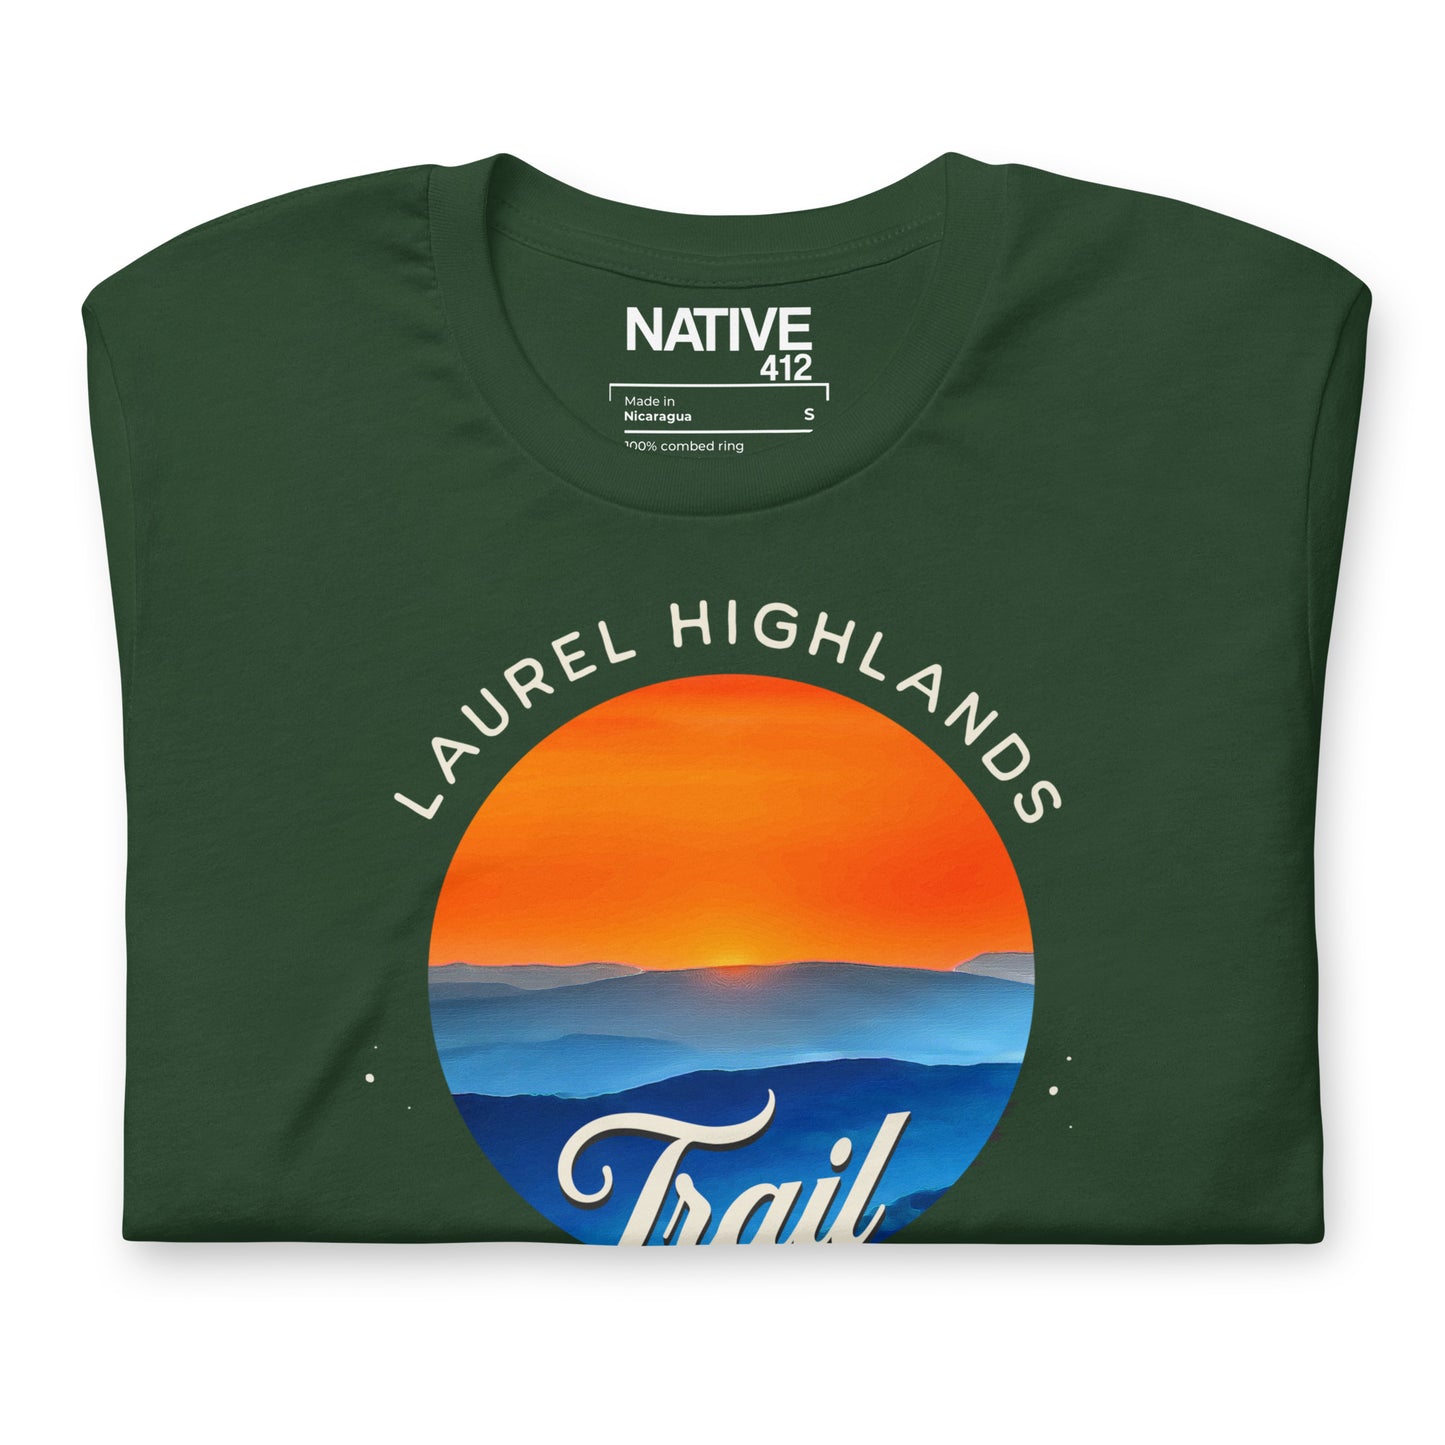 Laurel Highlands Trail Expedition Unisex t-shirt